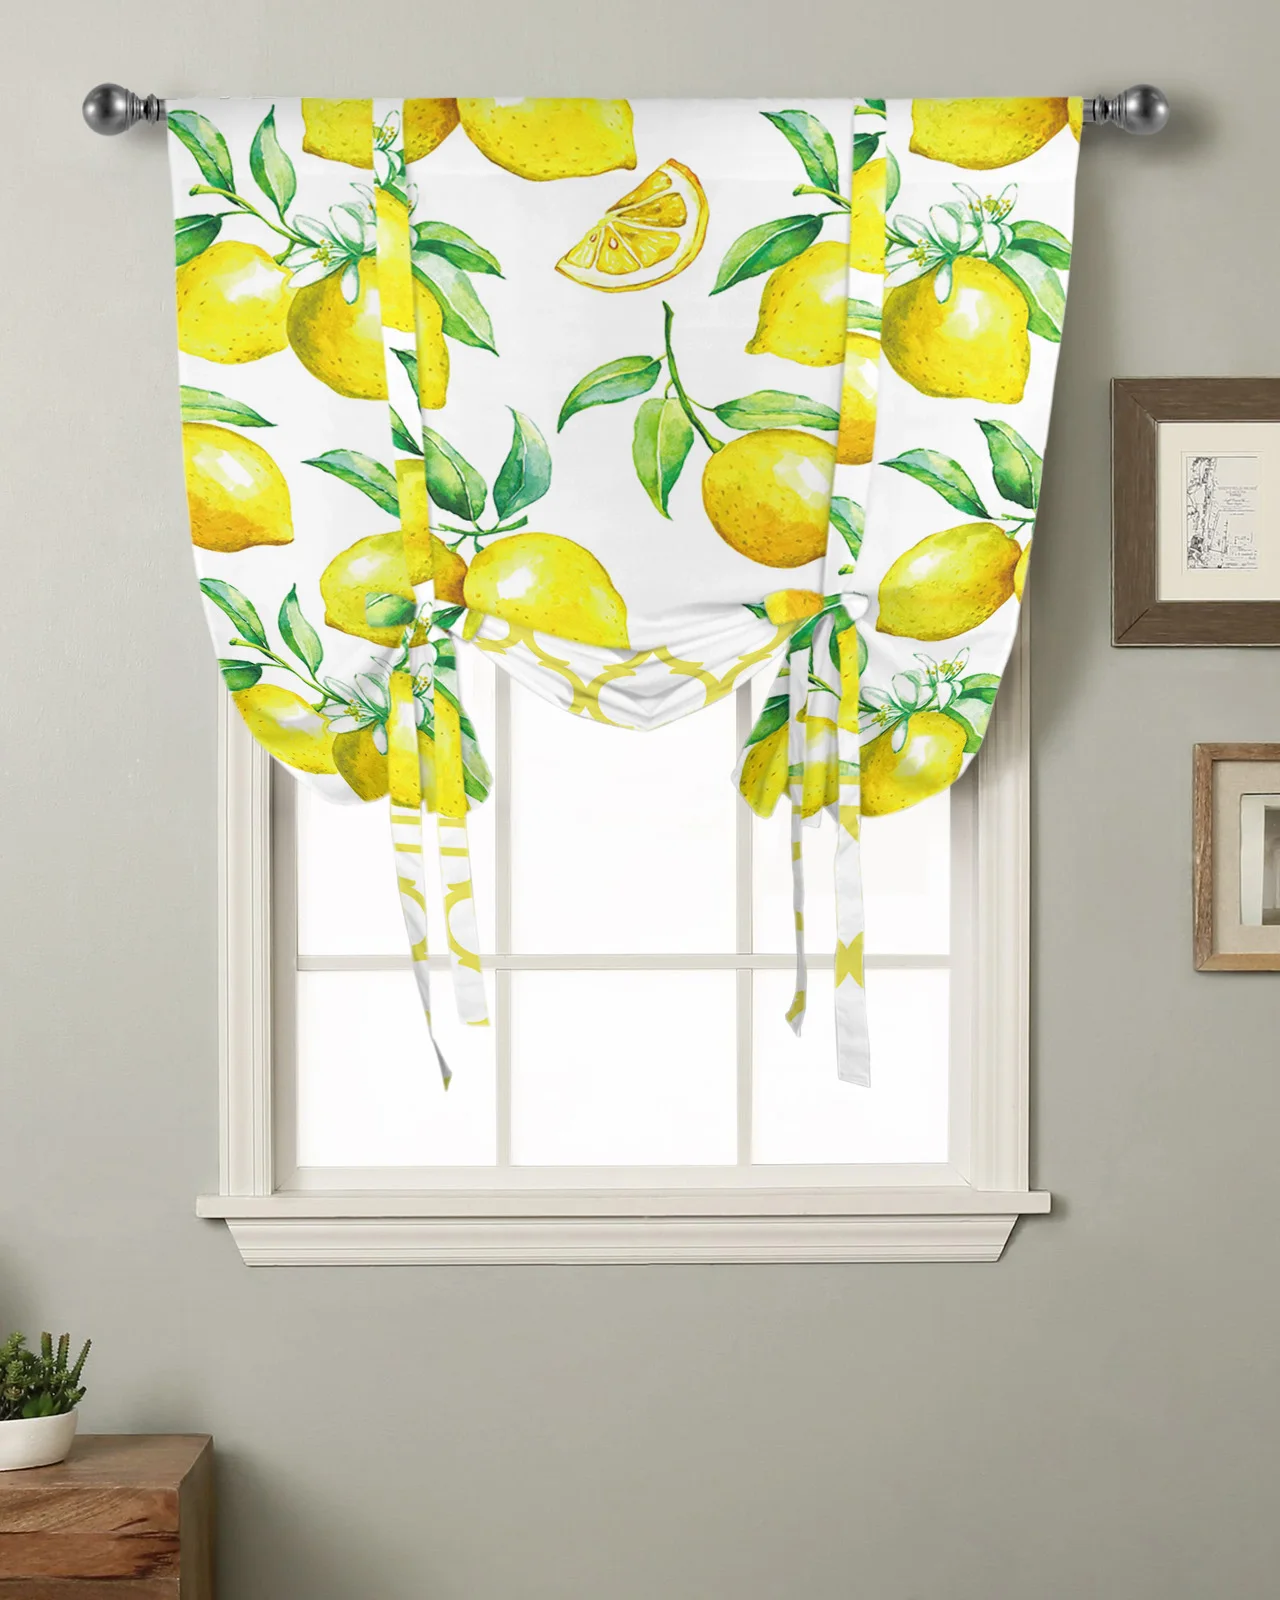 Fruit Fresh Lemon Yellow Moroccan Kitchen Short Window Curtain Rod Pocket Curtains Home Decor Small Window Roman Tie Up Curtains